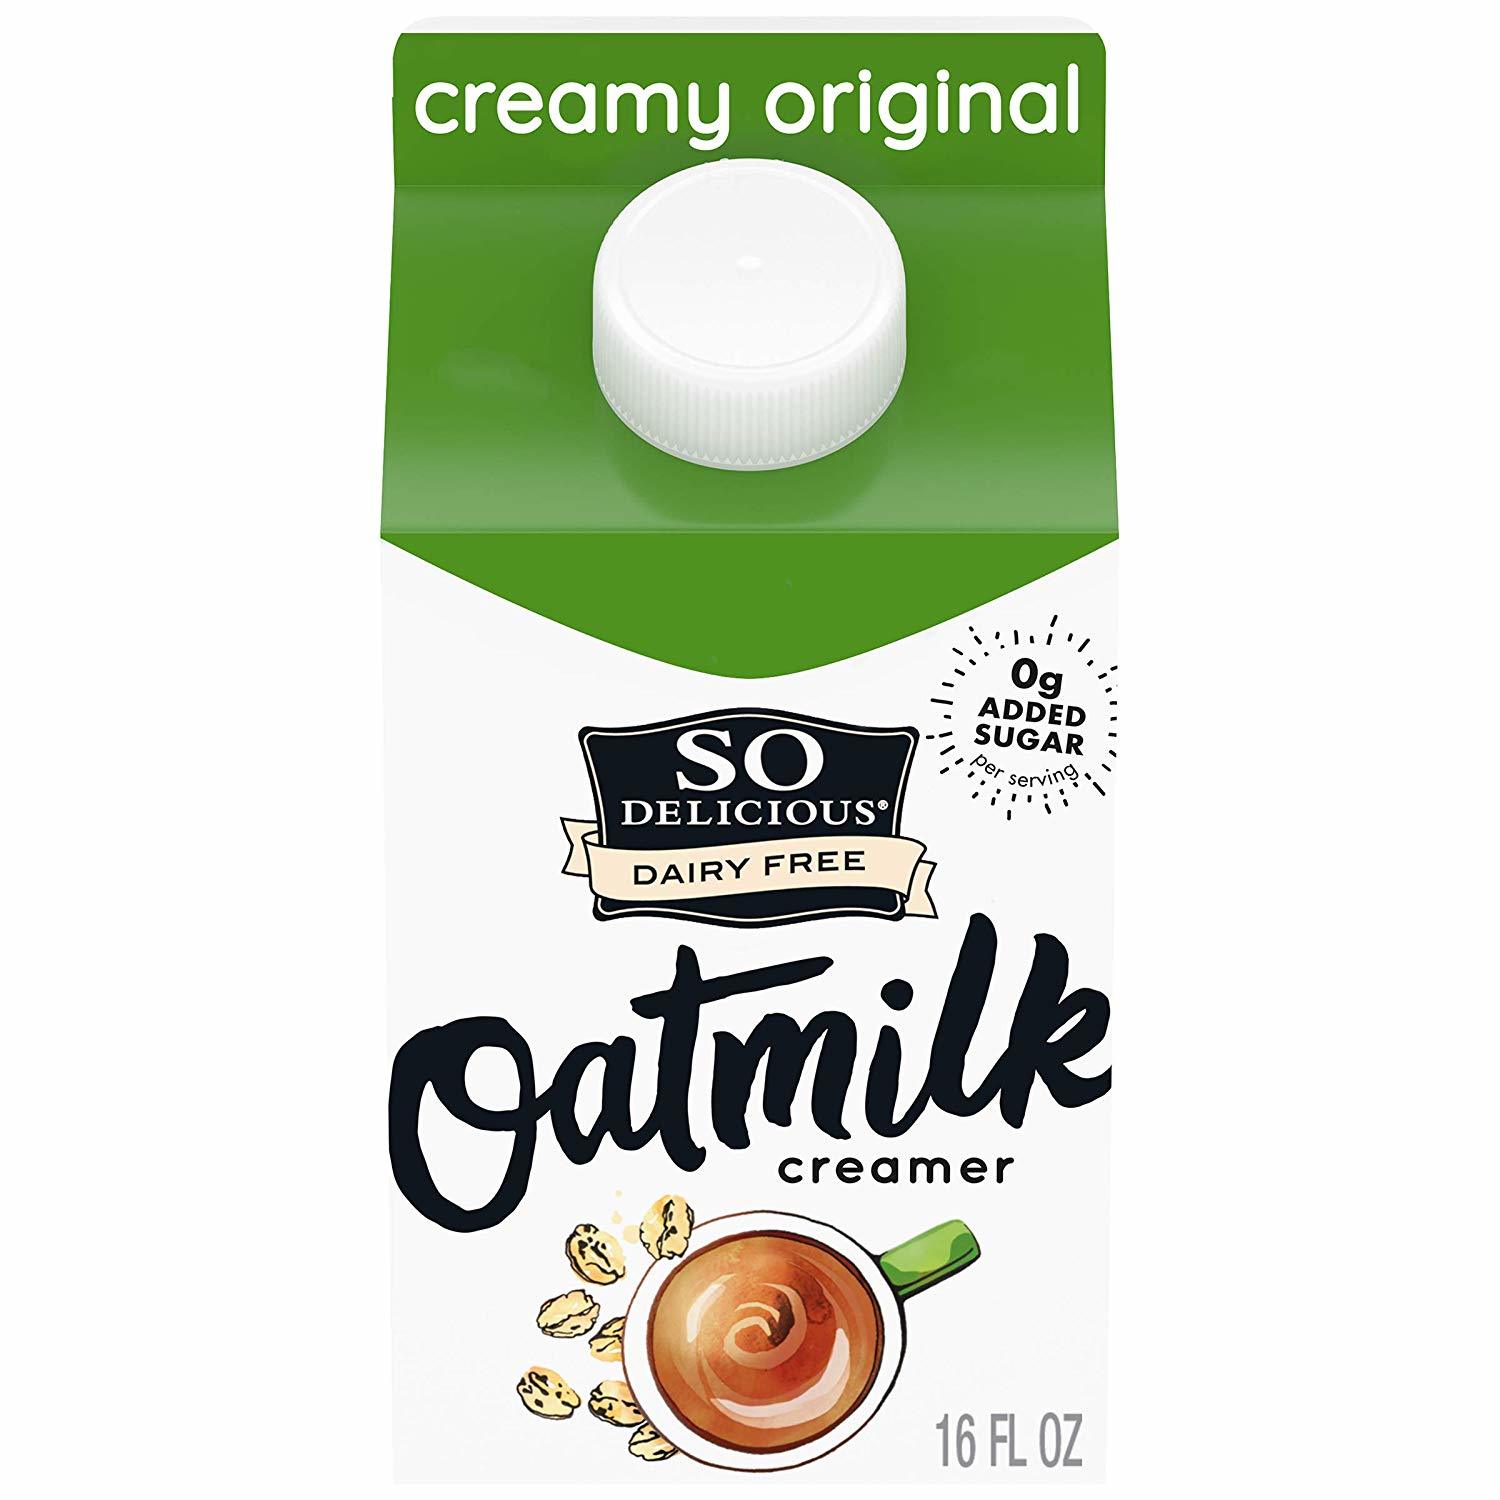 Creamy original oatmilk creamer